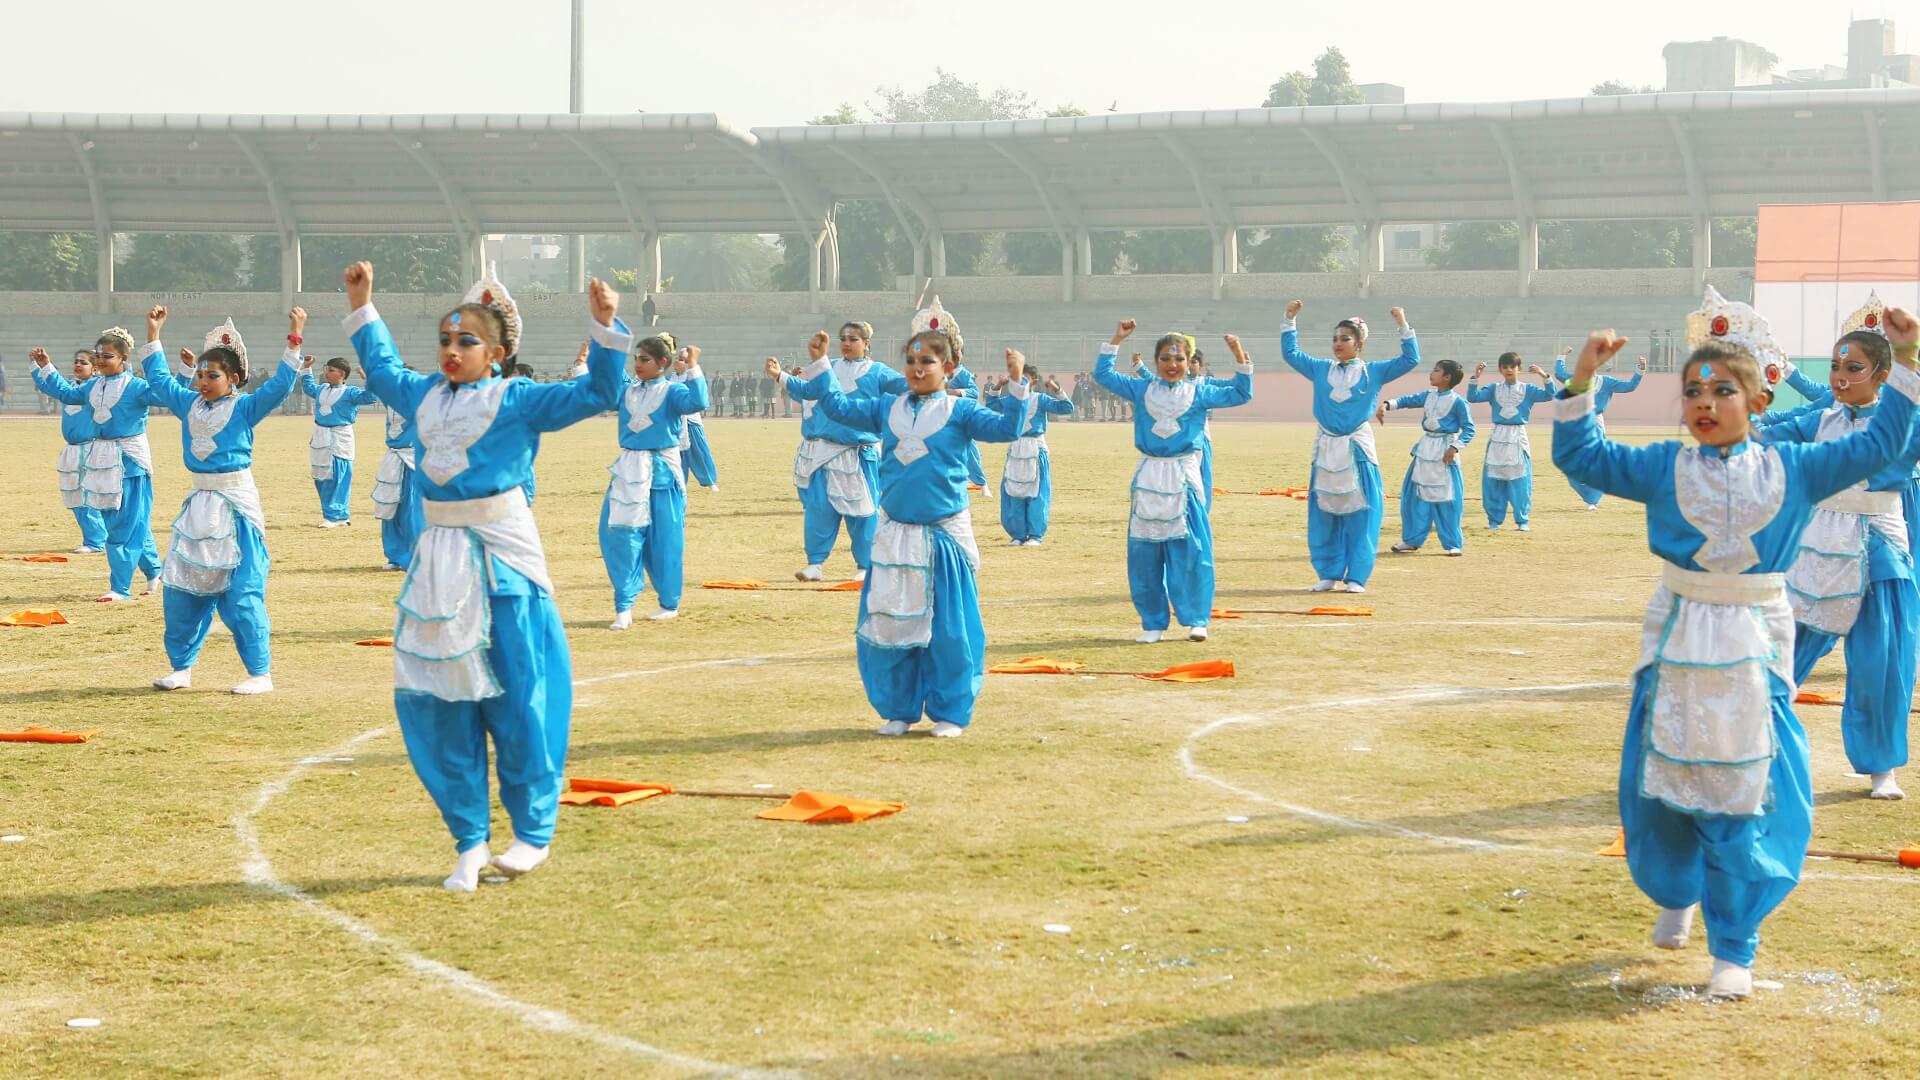 Group Dance Performance at Richmondd Global School New Delhi